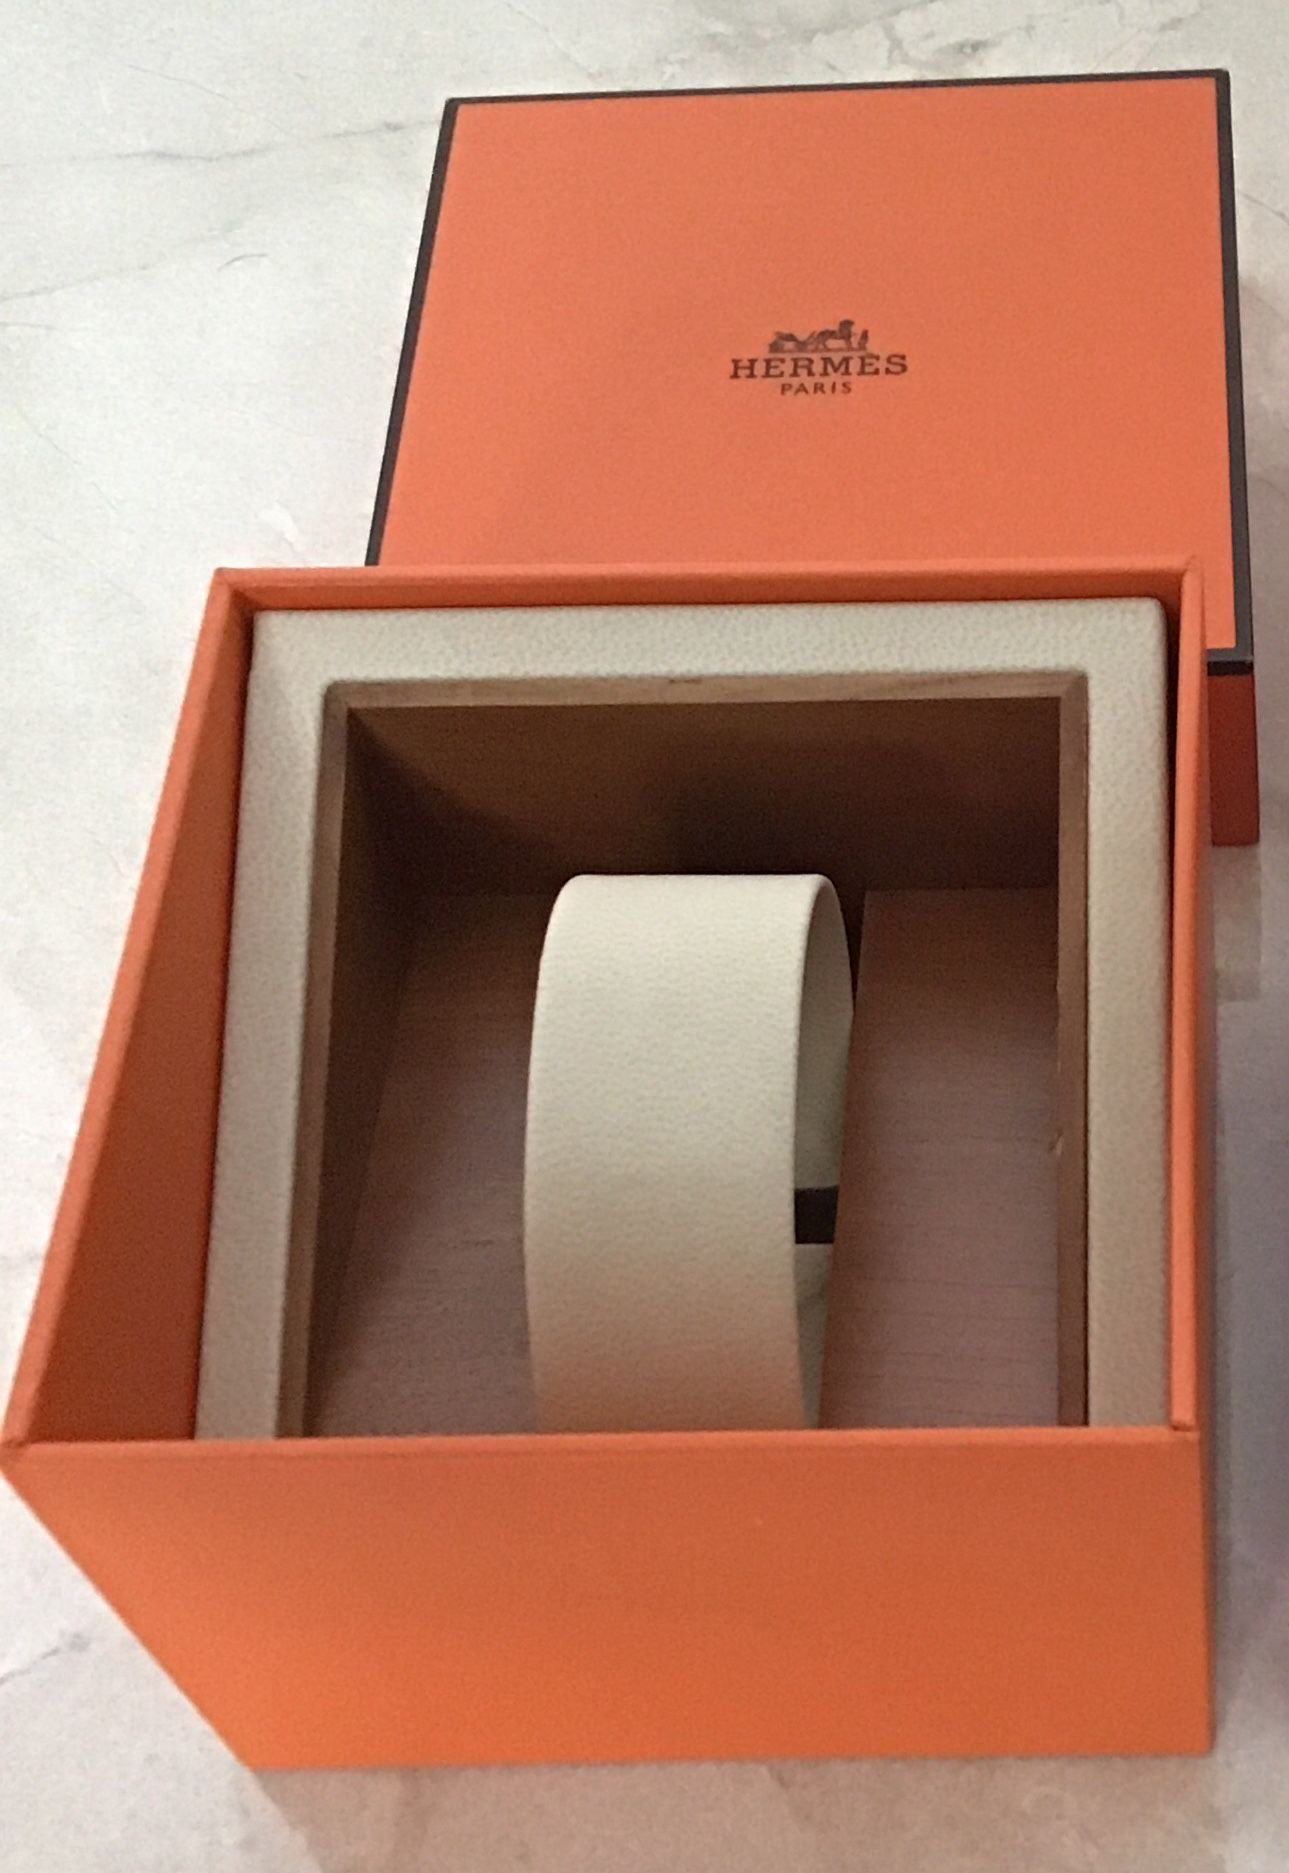 Authentic Hermès of Paris empty watch gift box plus matching Hermès gift bag as a set